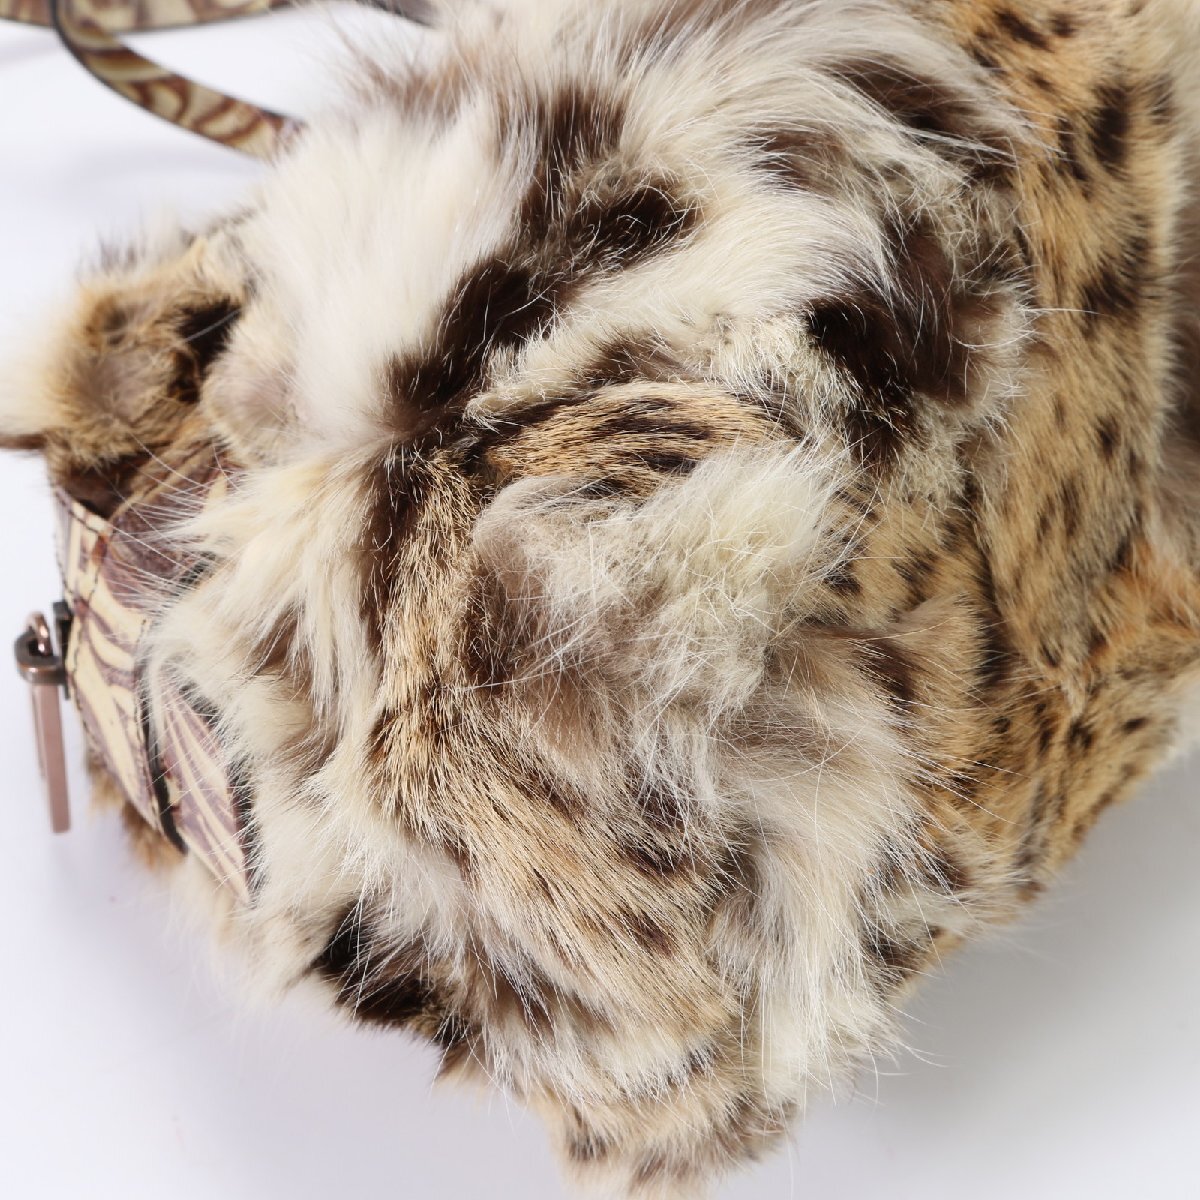 1 jpy # beautiful goods # rare # Fendi # lynx cat fur tote bag shoulder .. shoulder hand fur leather animal lady's EEM Q13-3